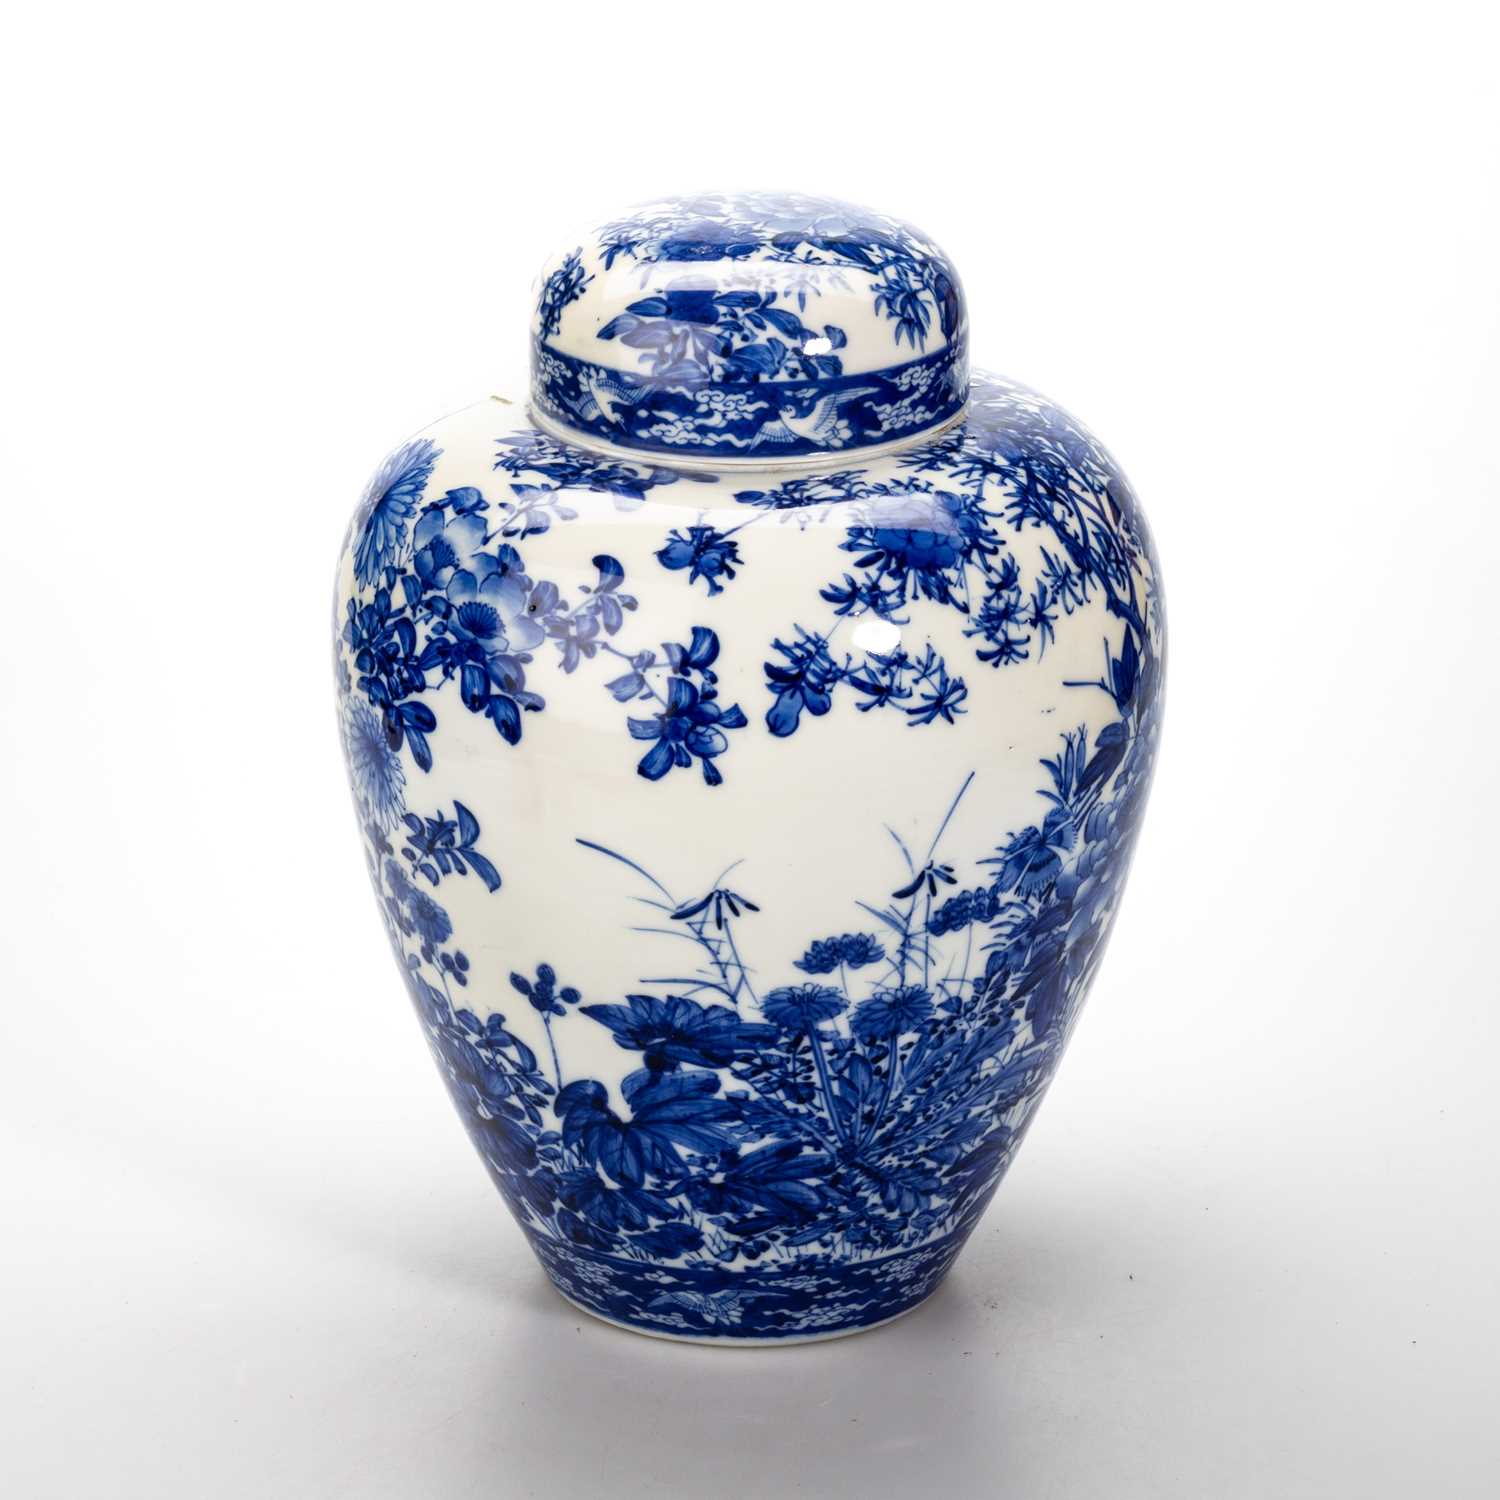 A LARGE JAPANESE BLUE AND WHITE PORCELAIN GINGER JAR, CIRCA 1900 - Image 2 of 3